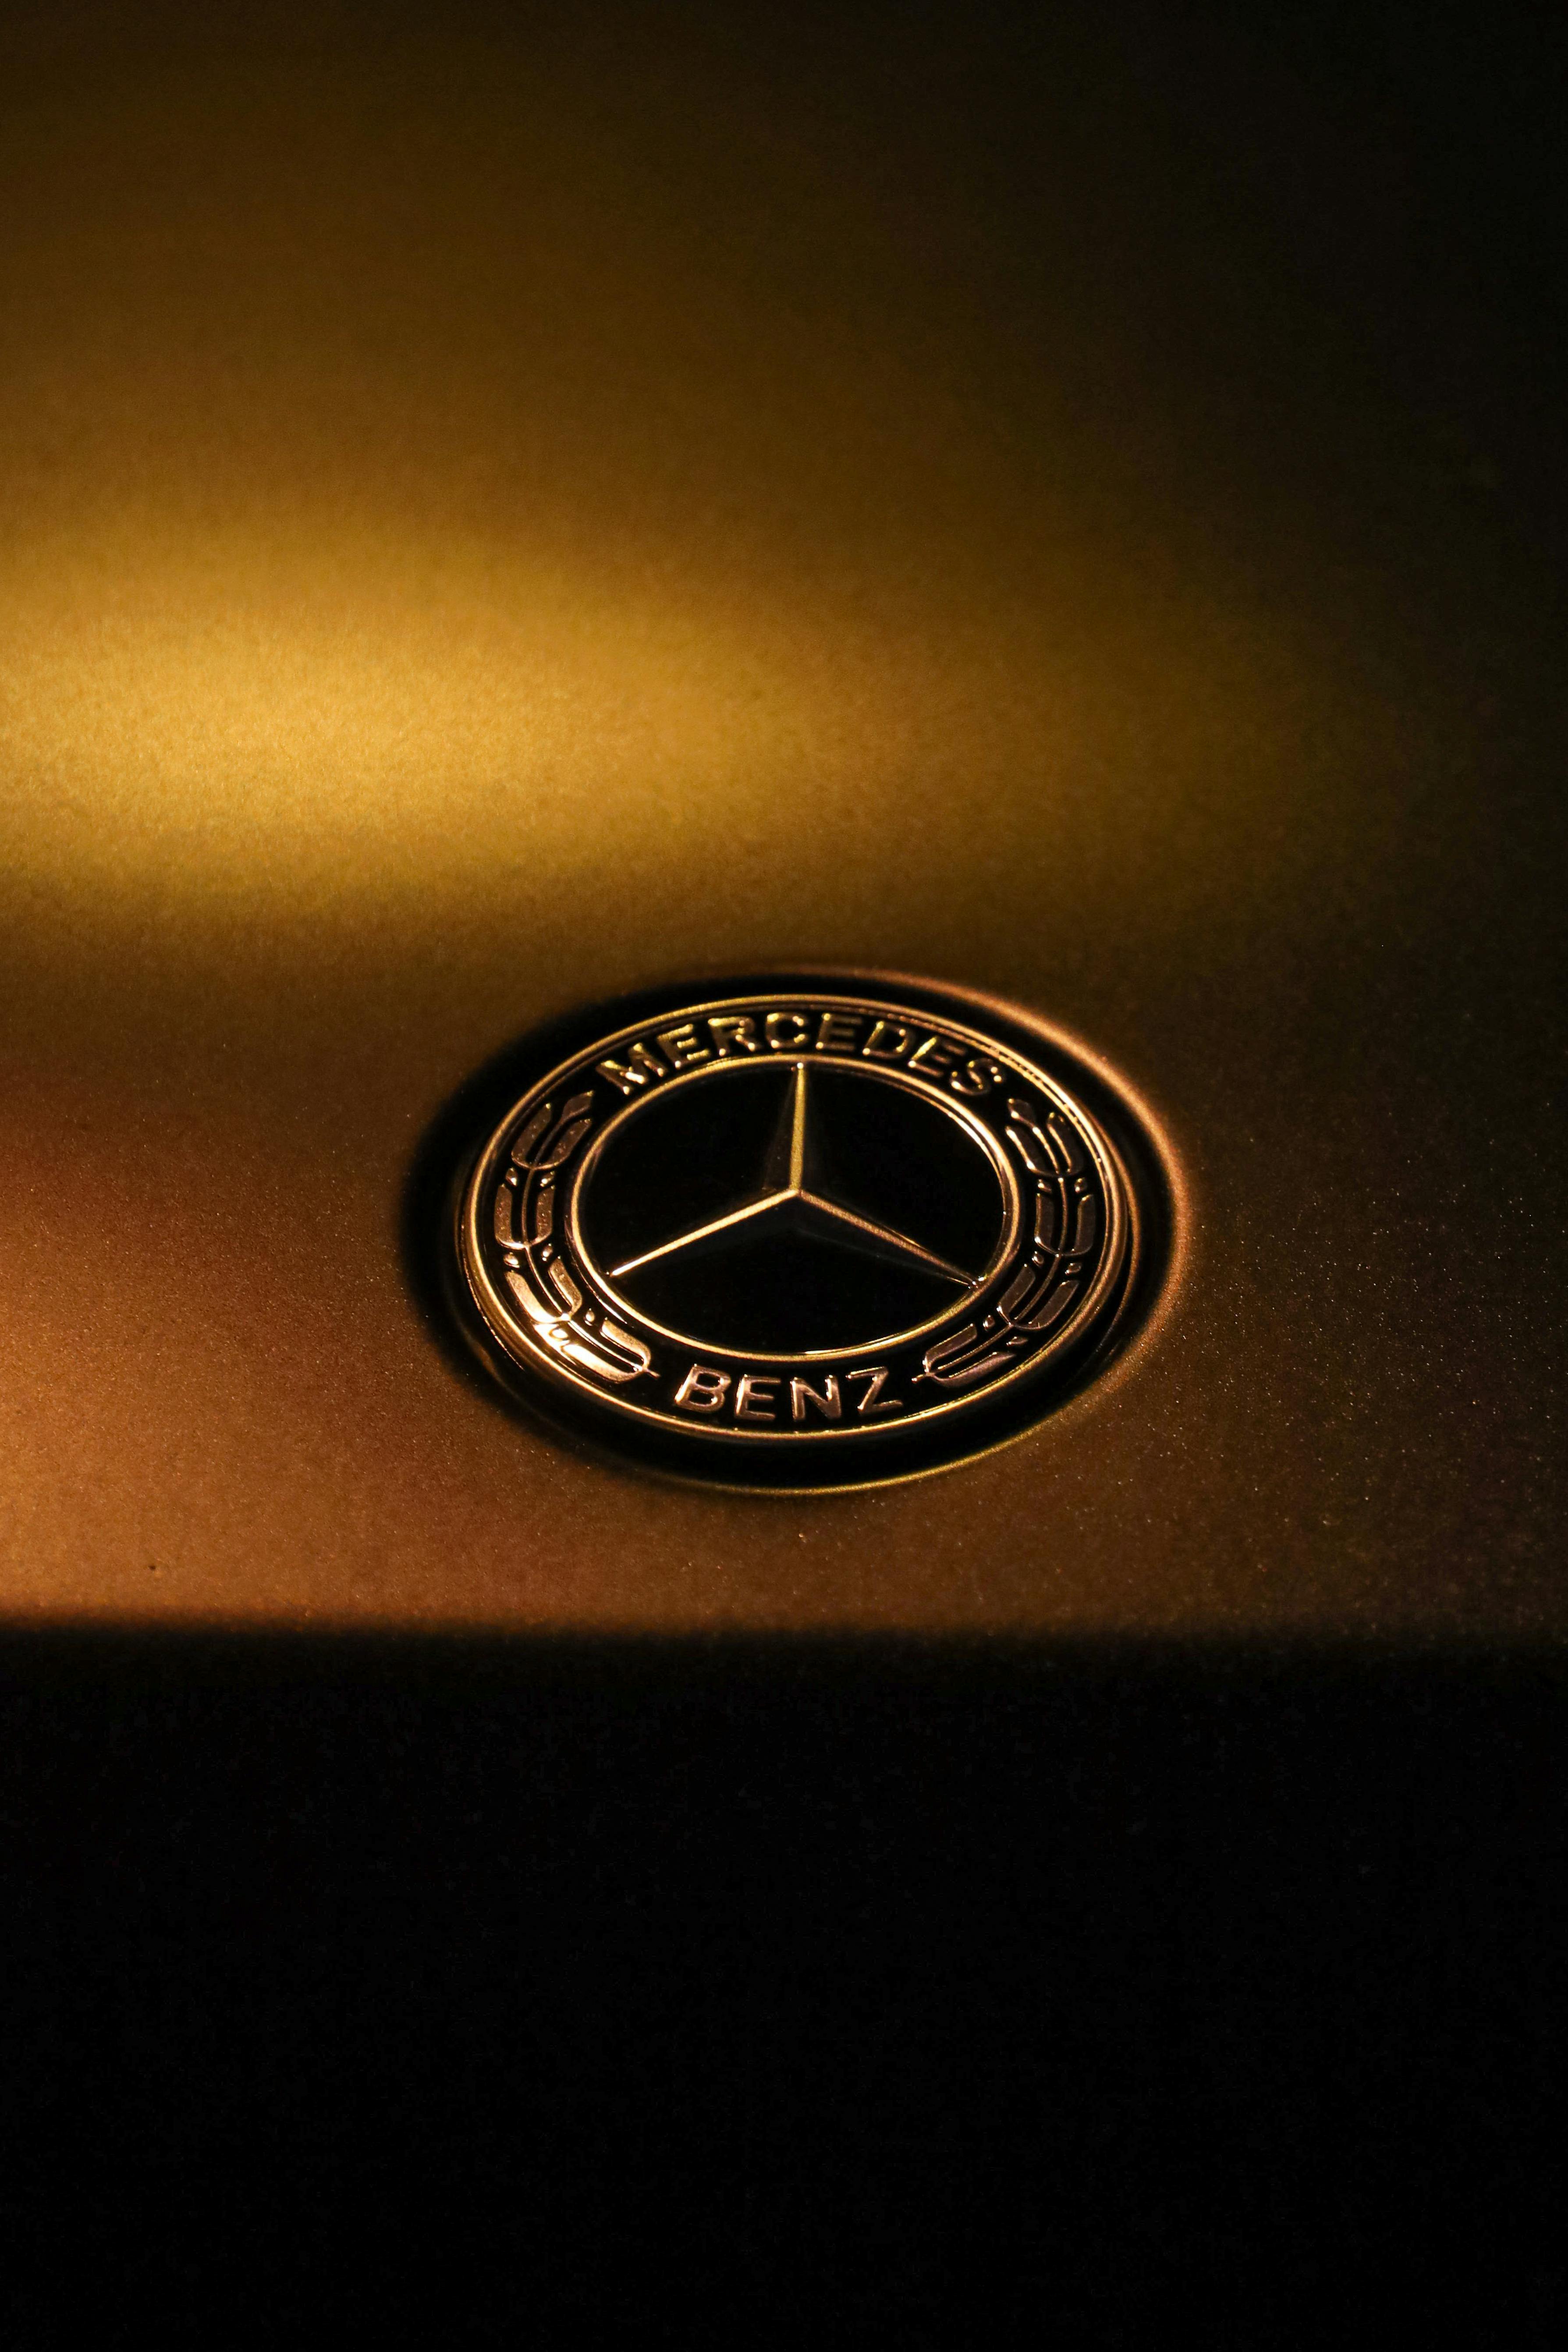 1000+ Mercedes Benz Logo Pictures | Download Free Images on Unsplash